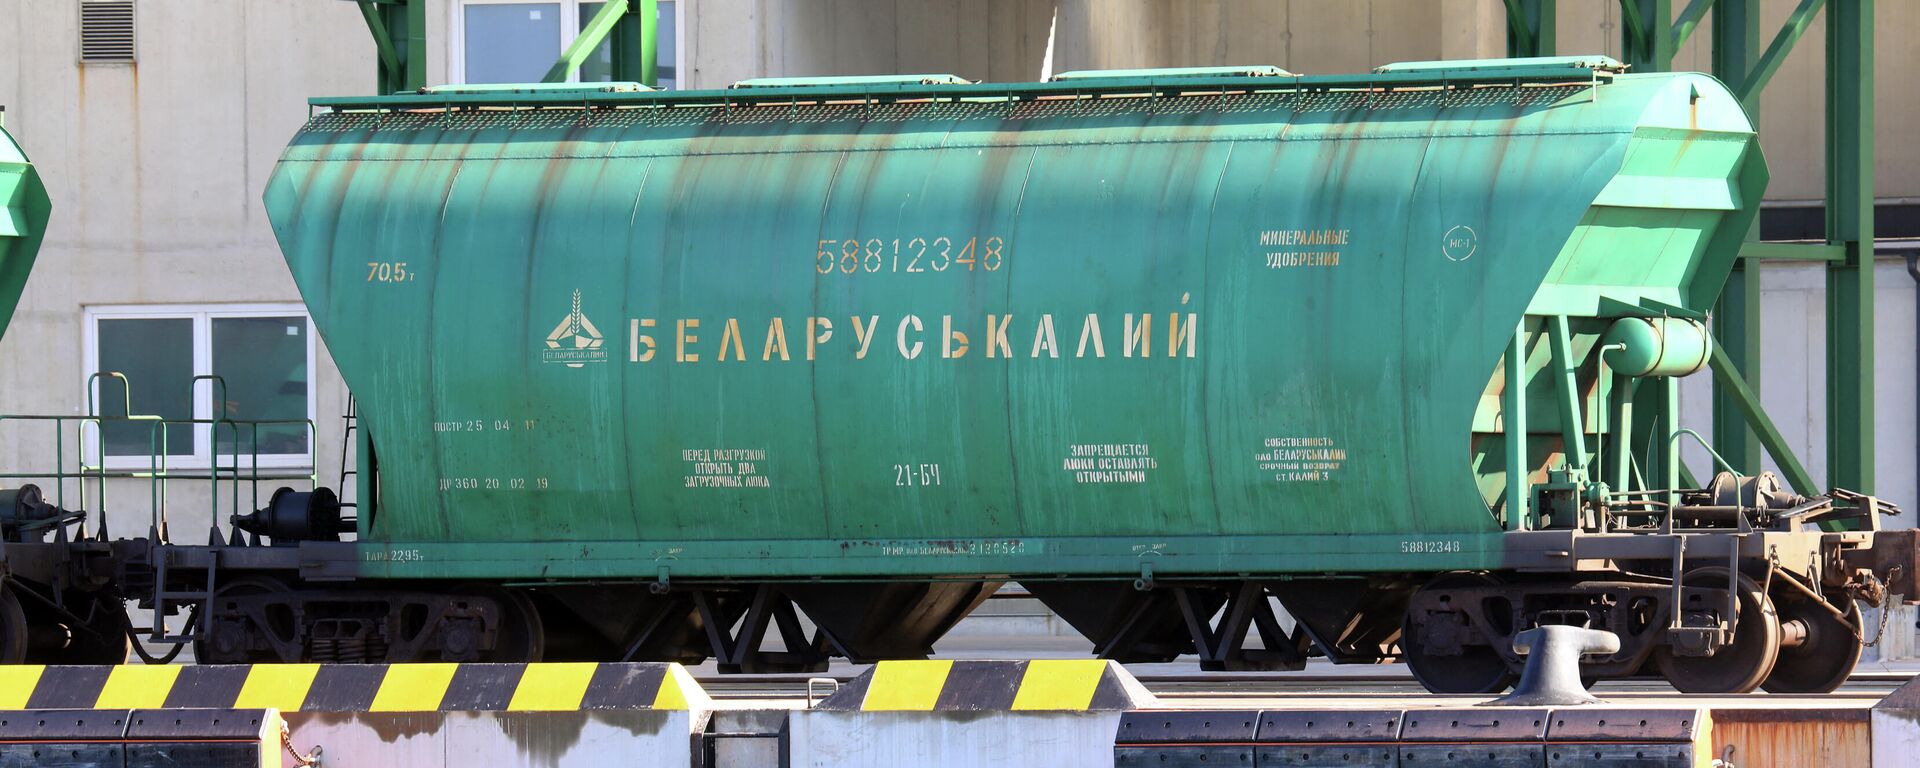 Kalio mineralinių trąšų gamintojo Belaruskalij vagonas Lietuvoje  - Sputnik Lietuva, 1920, 19.12.2021